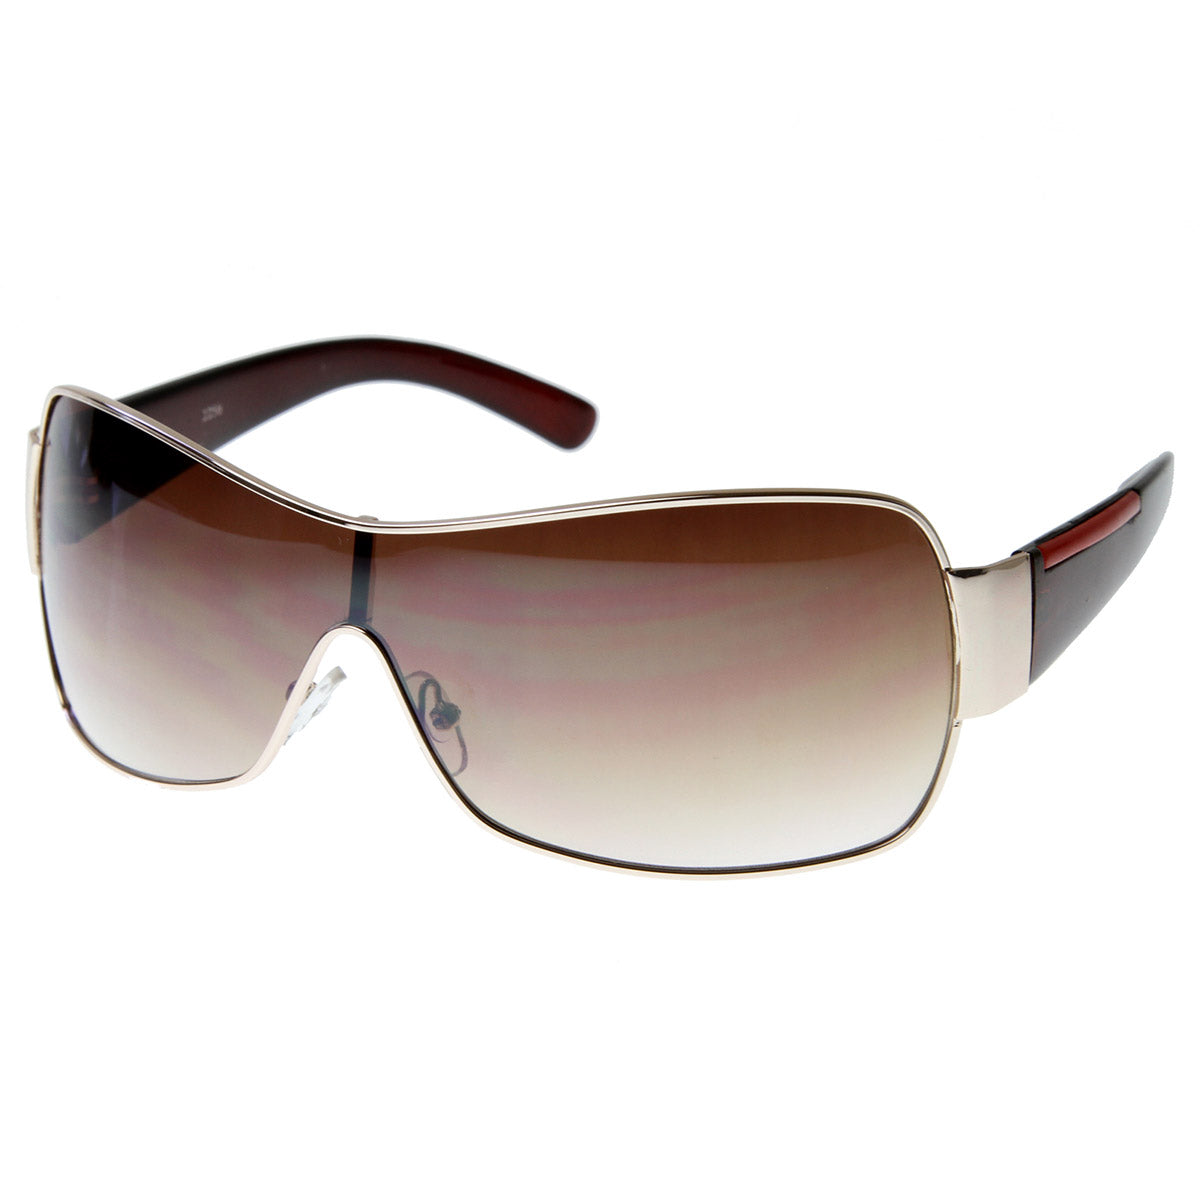 Designer Inspired Modern Shield Sunglasses - sunglass.la